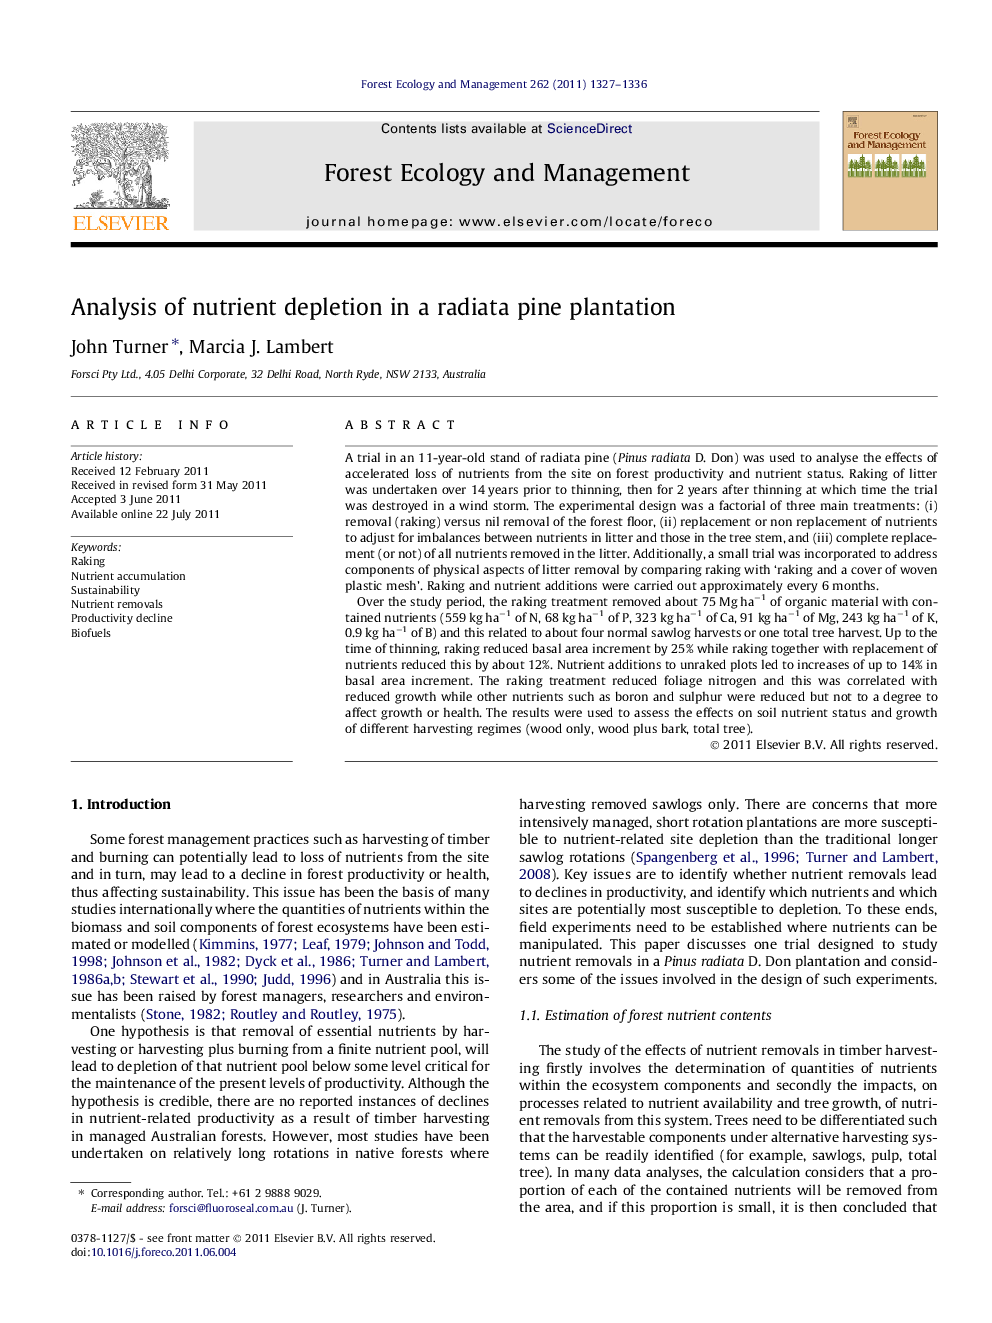 Analysis of nutrient depletion in a radiata pine plantation